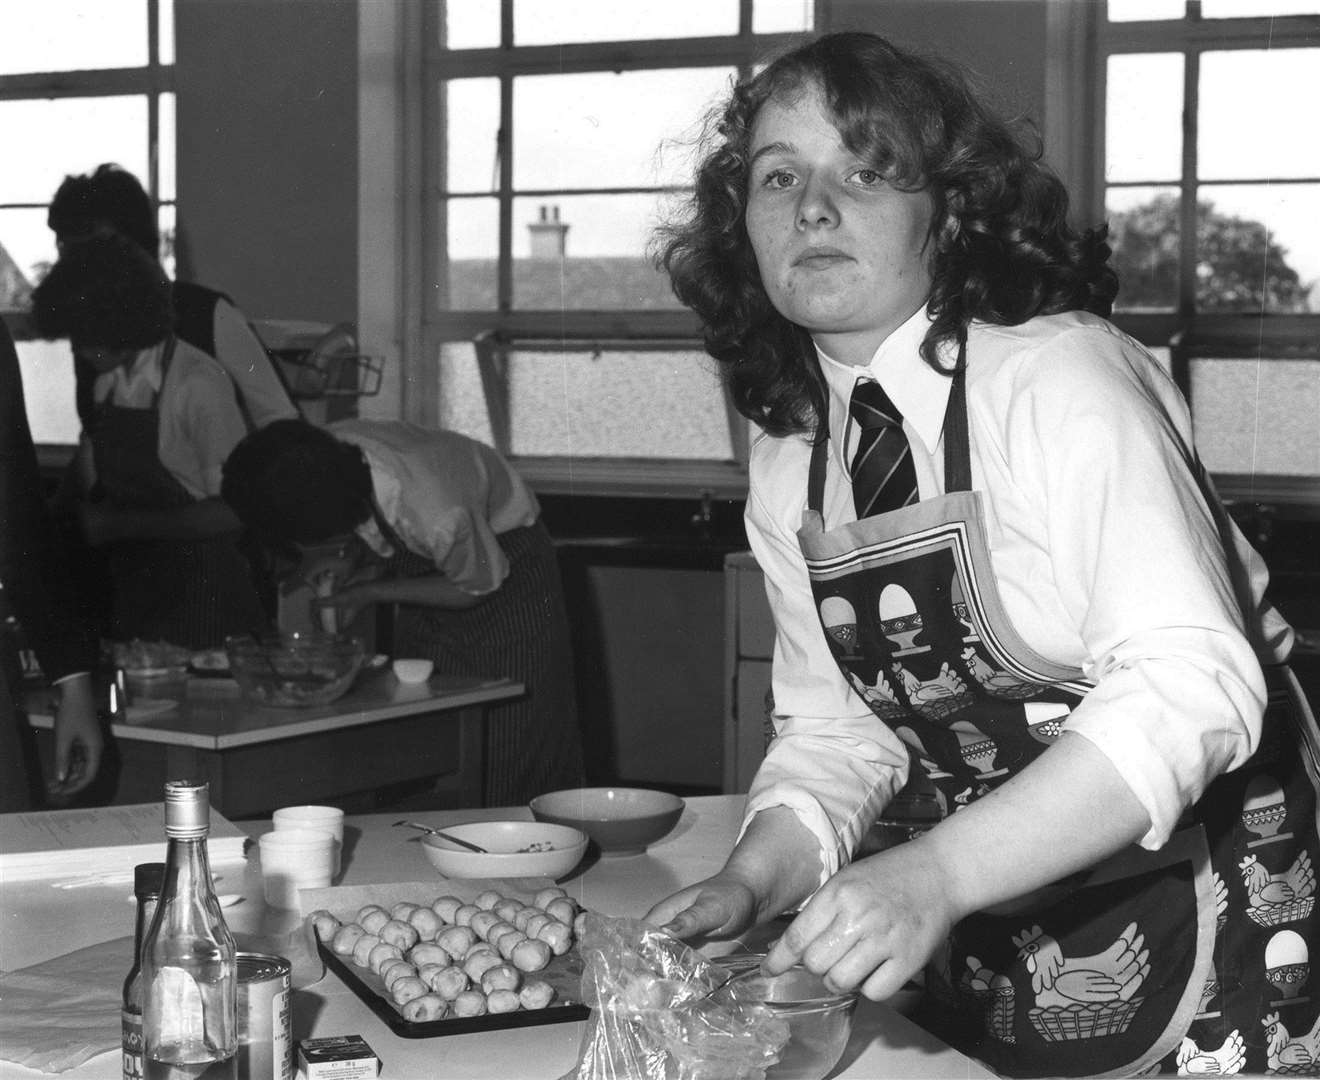 Morag Mackenzie’s baking skills were demonstrated at a Wick High School fayre in 1981.